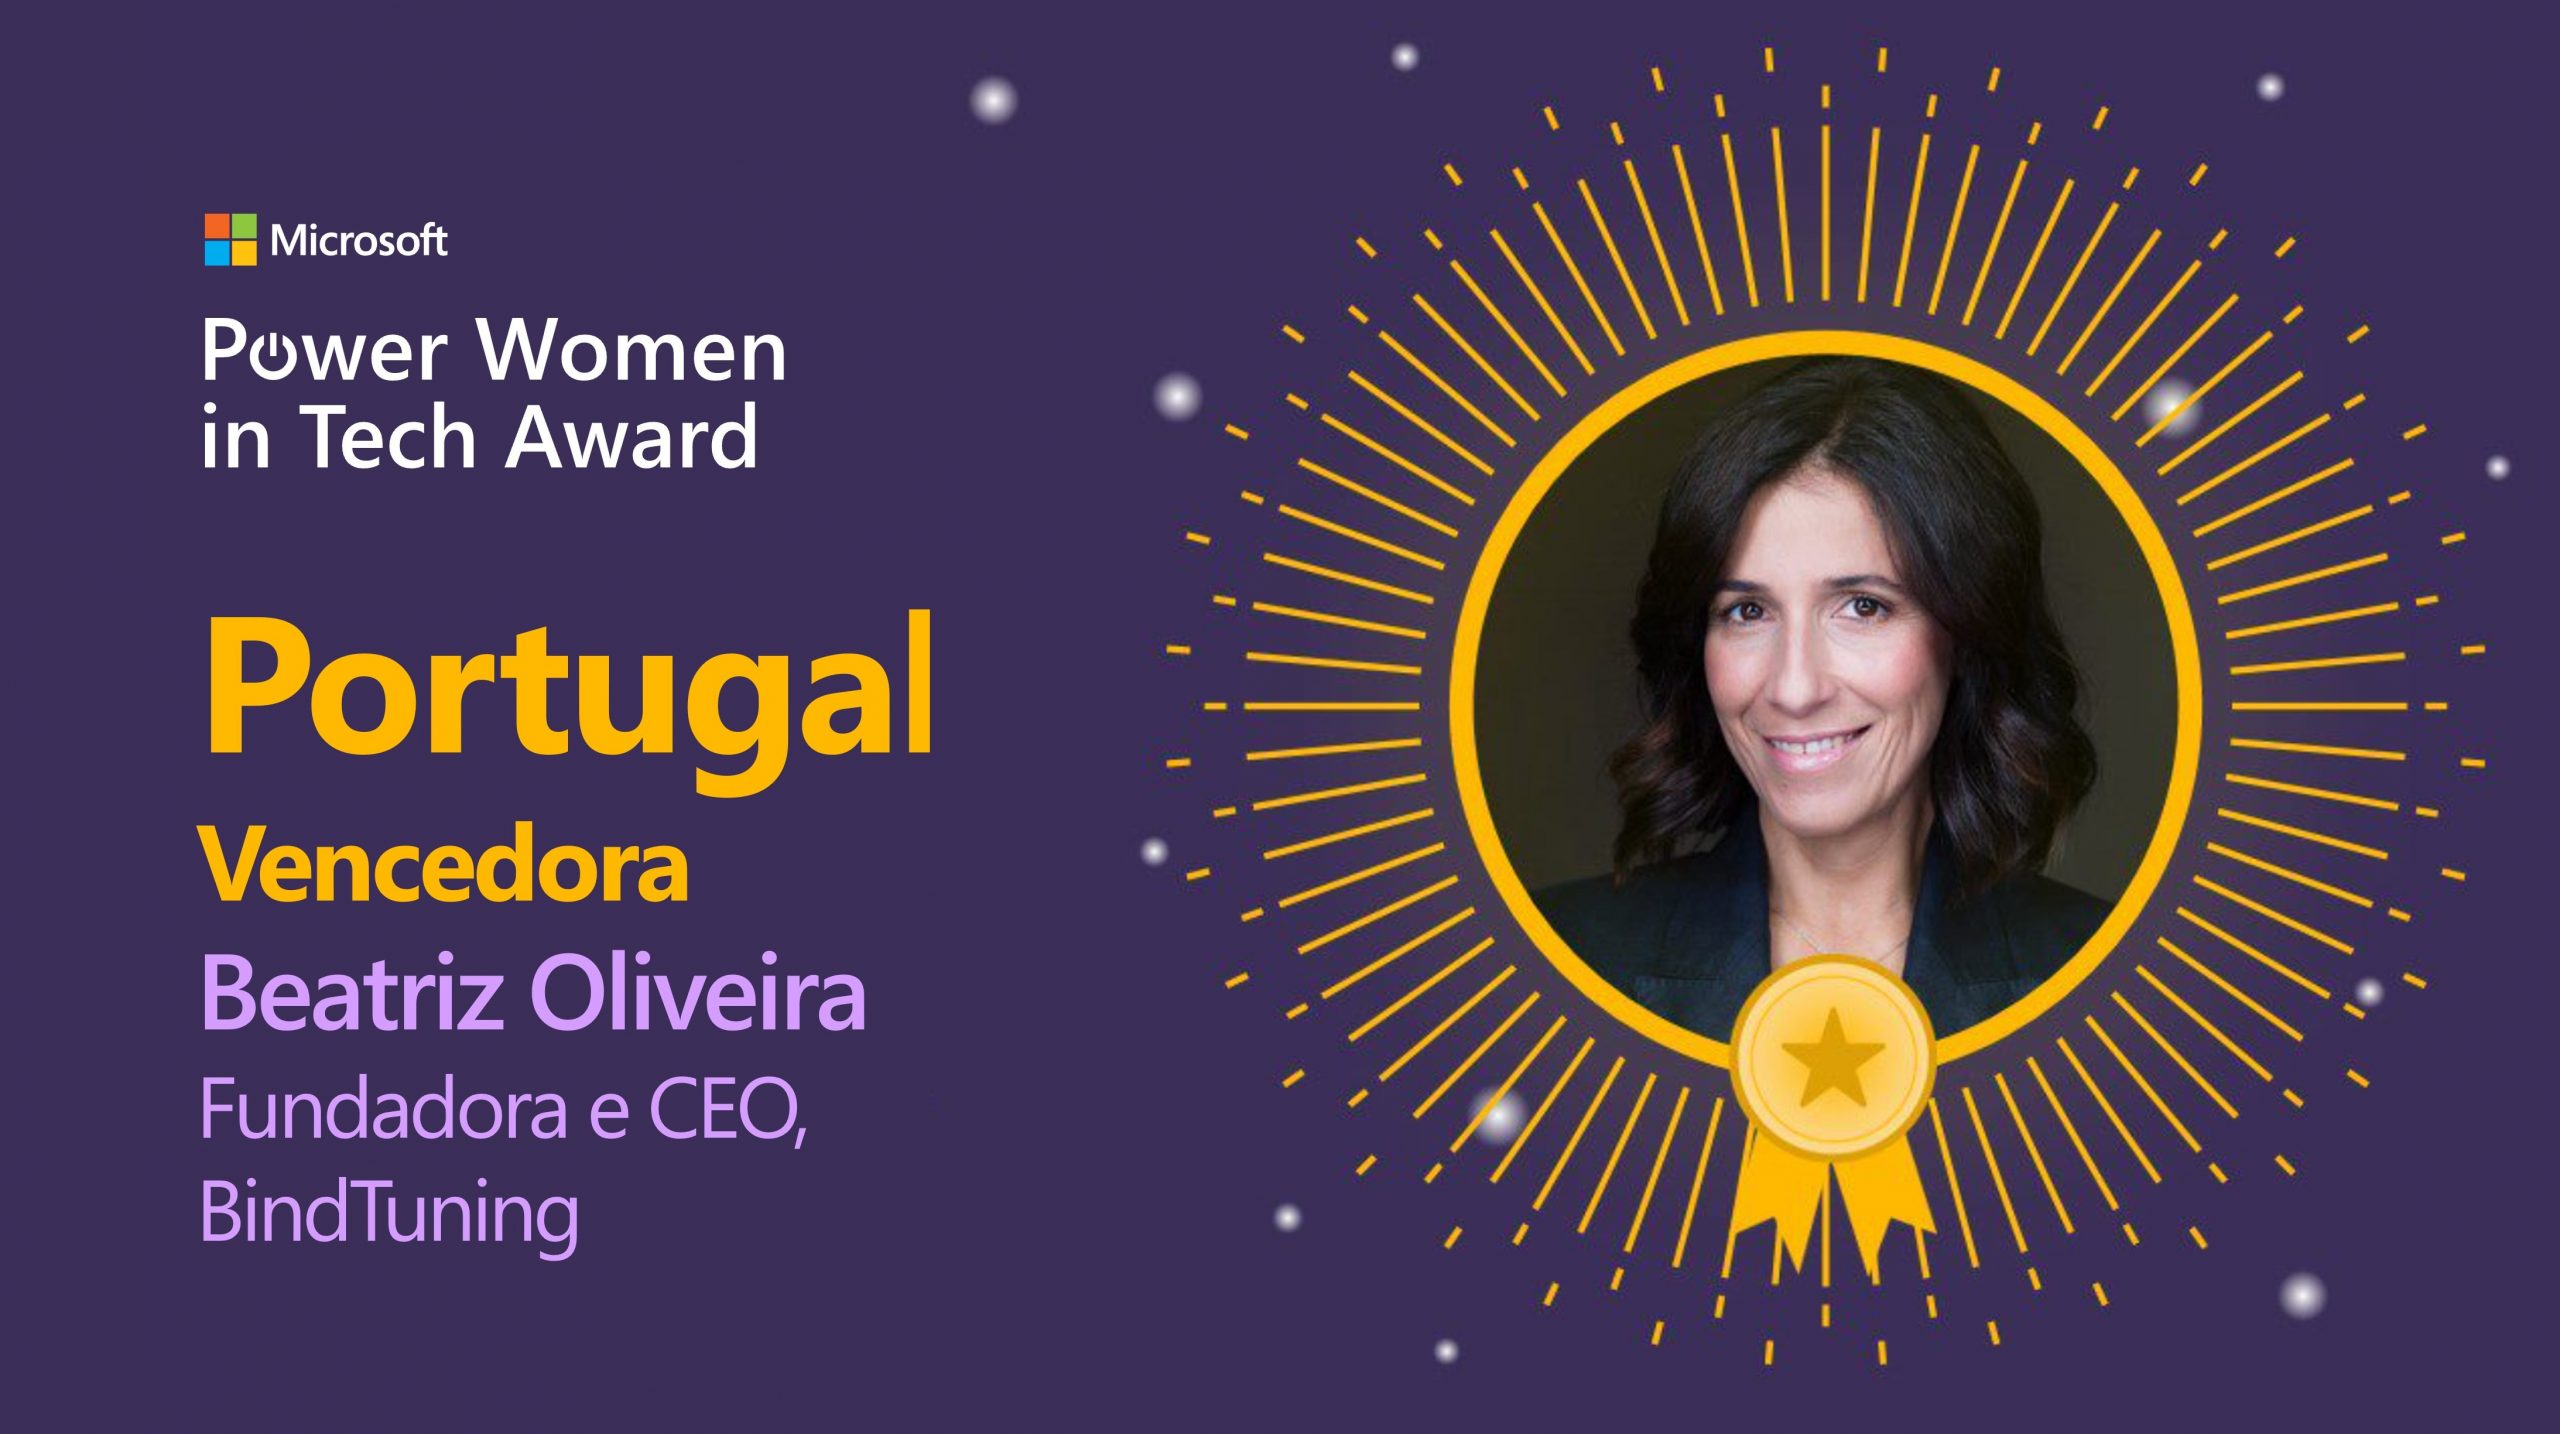 Picture of Beatriz Oliveira, Power Women in Tech Award Winner, on a purple background